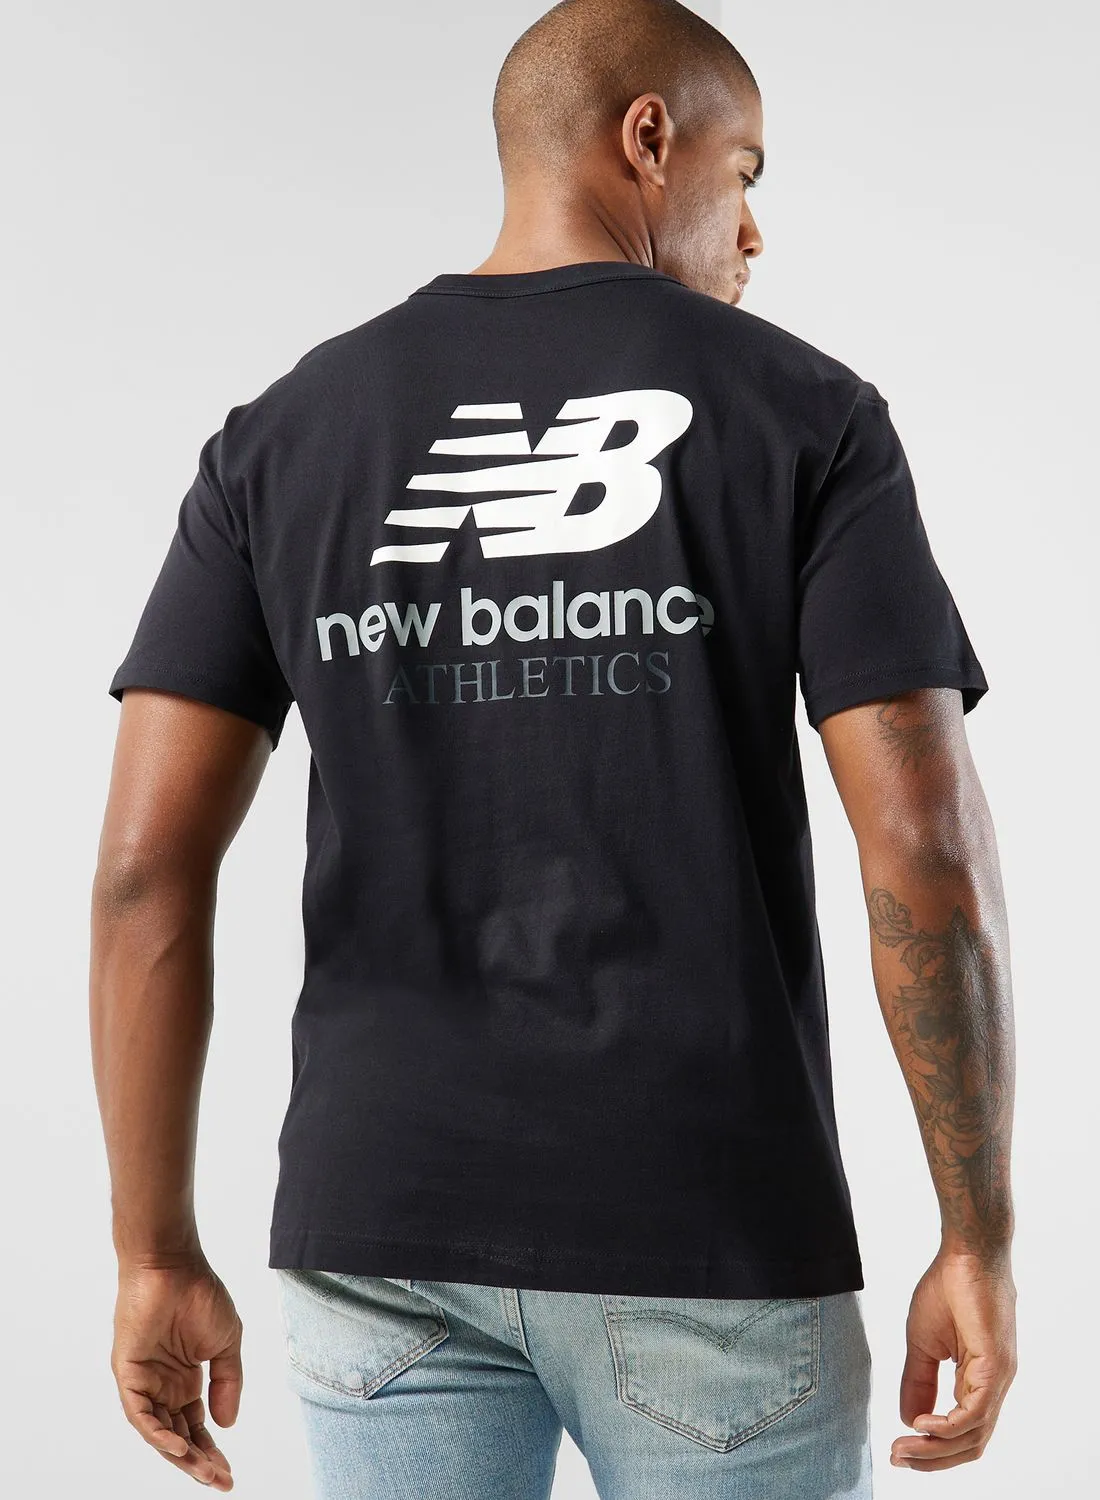 New Balance Athletics Graphic Brand T-Shirt